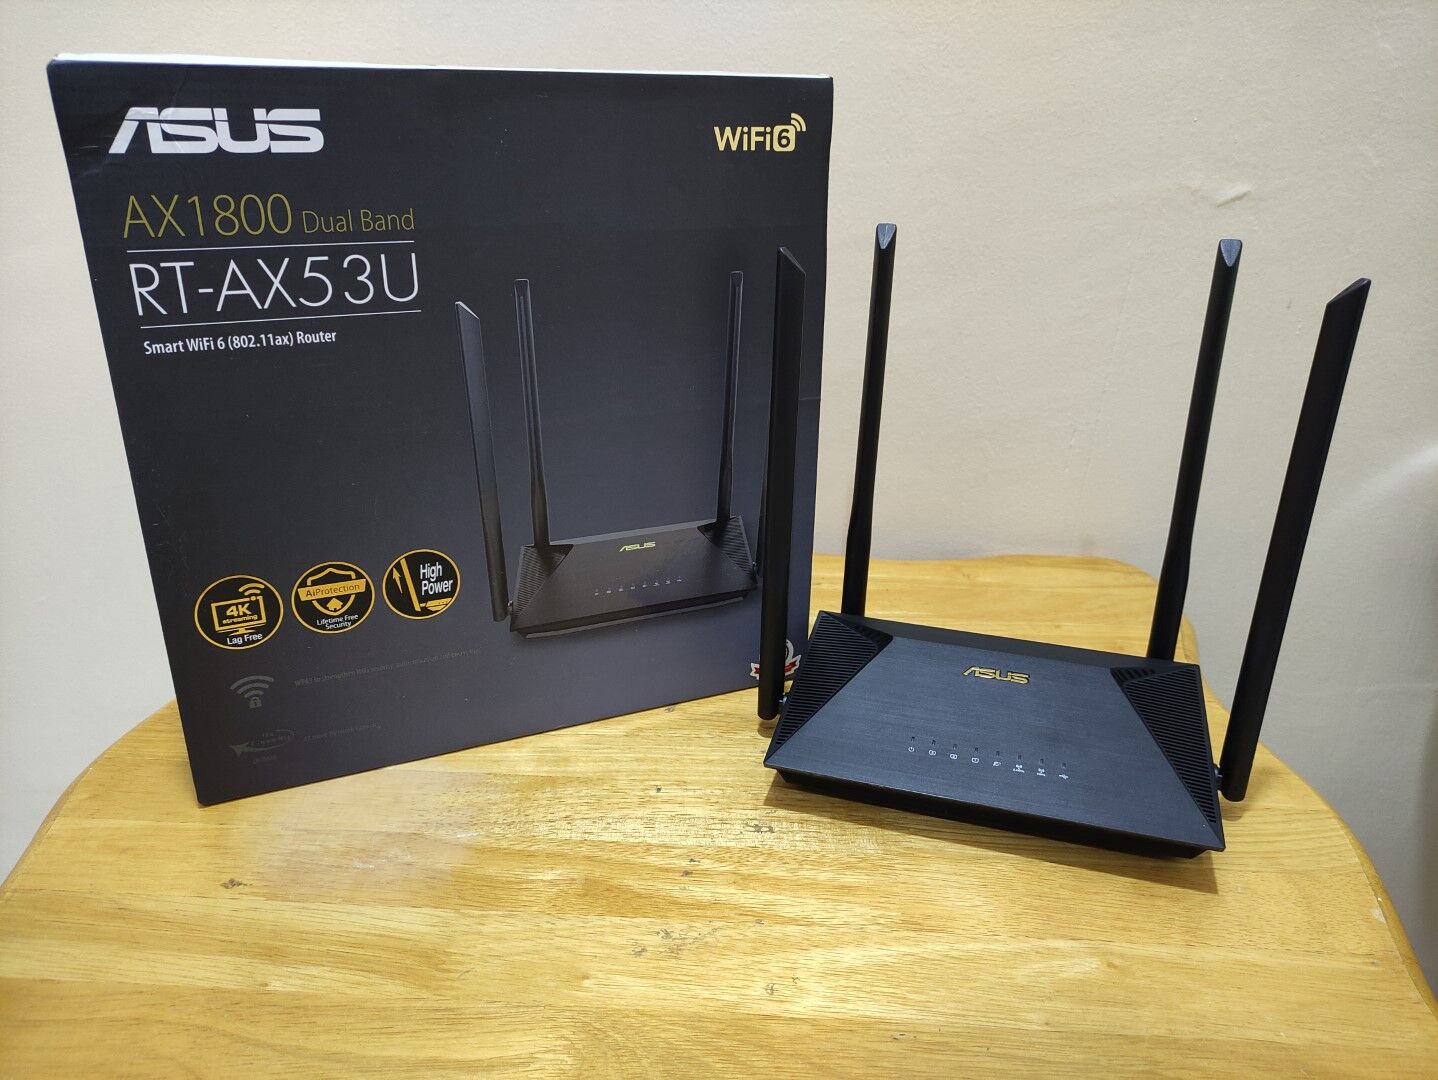 ASUS RT-AX53U AX1800 Dual Band Router Review 19